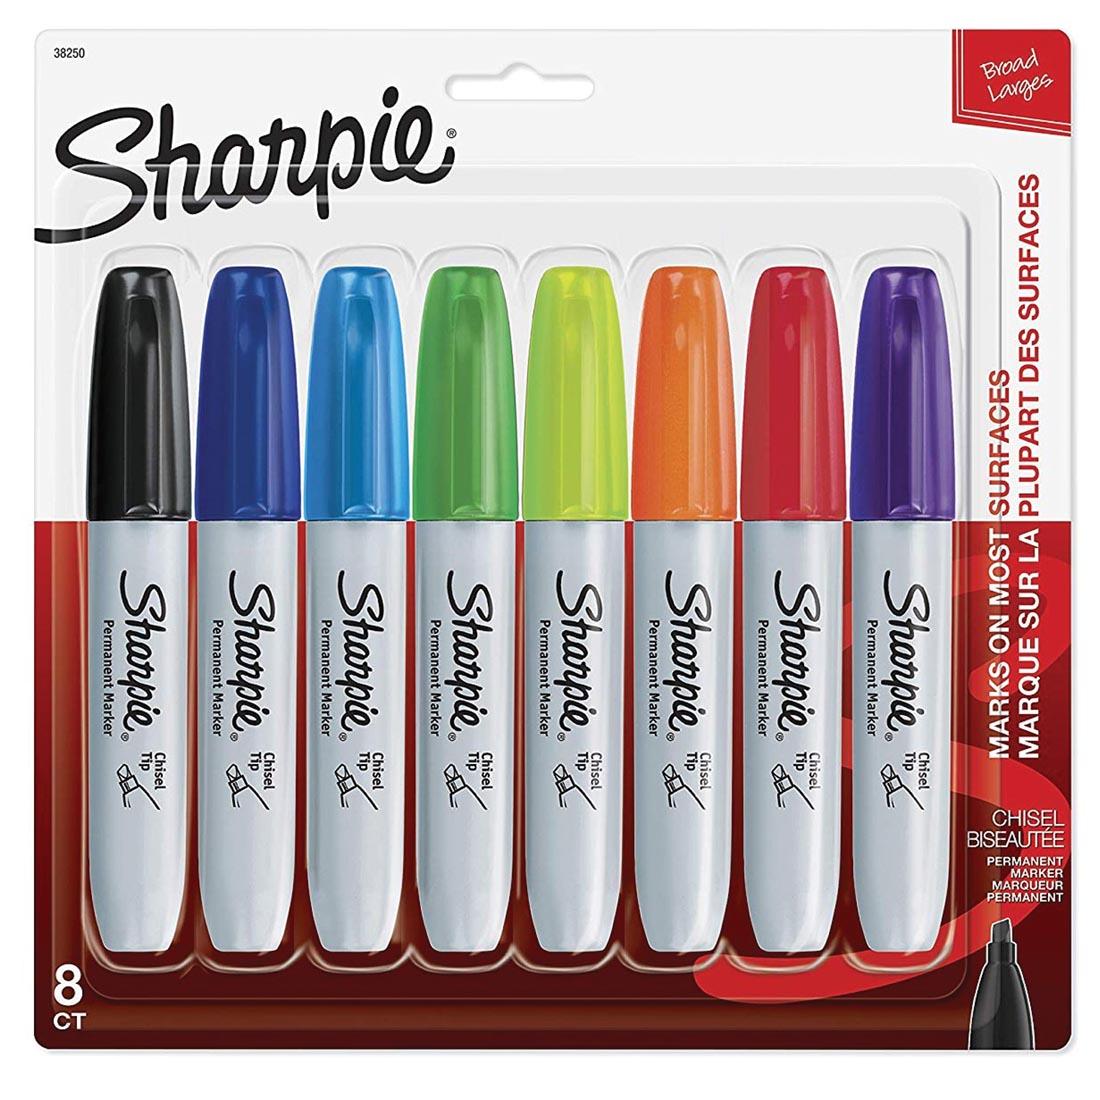 Sharpie Chisel Tip Permanent Markers 8-Color Set